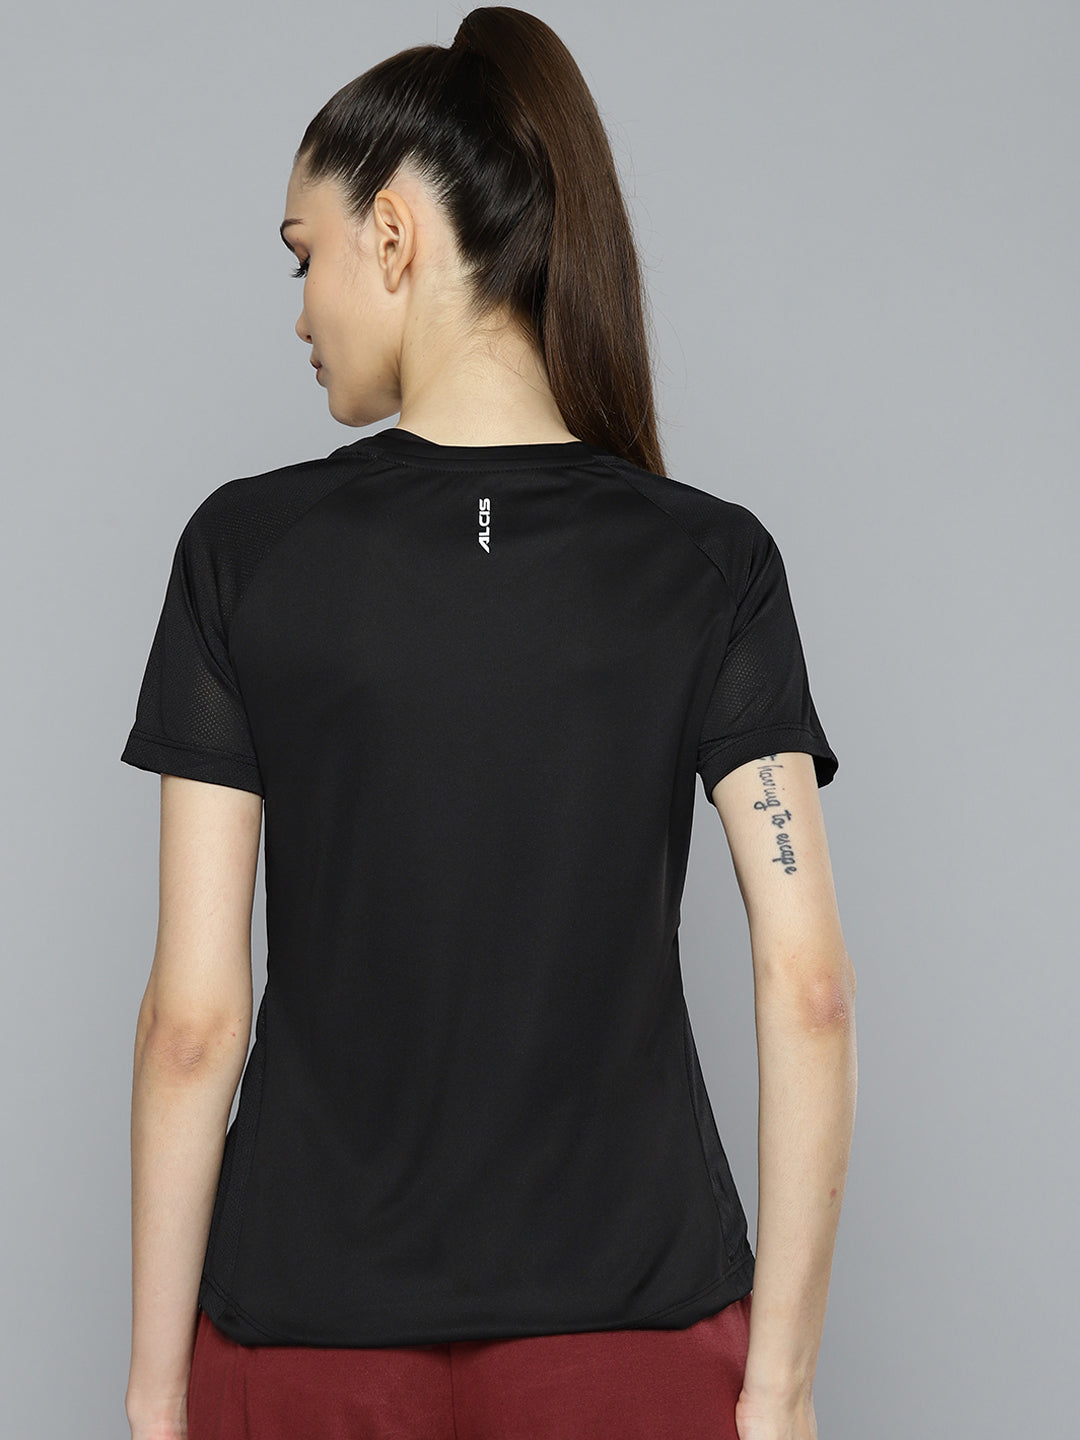 Alcis Women Black  White Typography Printed Slim Fit T-shirt